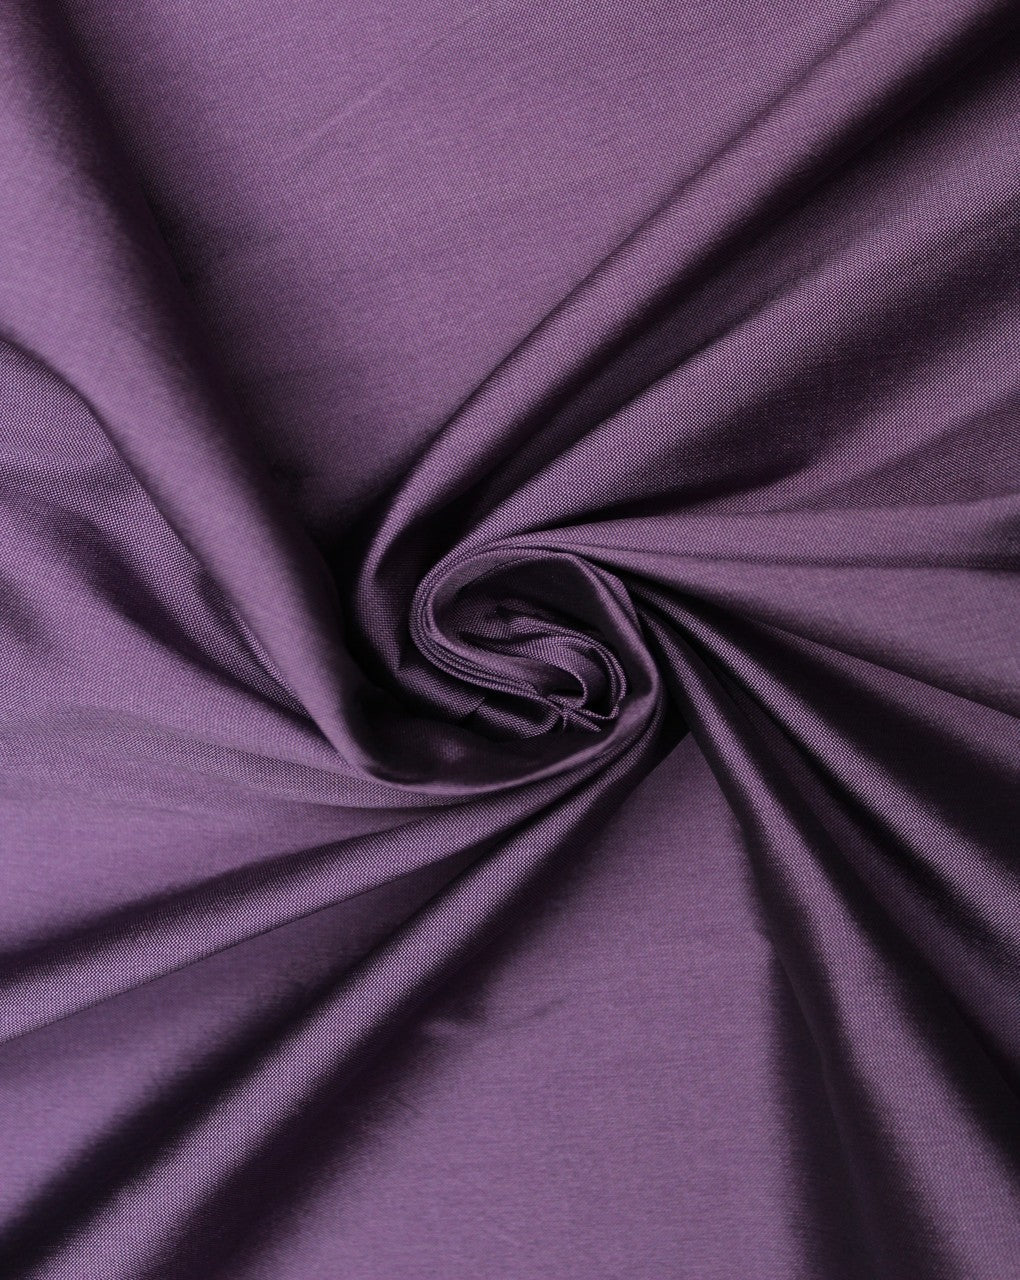 Plain Purple Polyester Taffeta Fabric